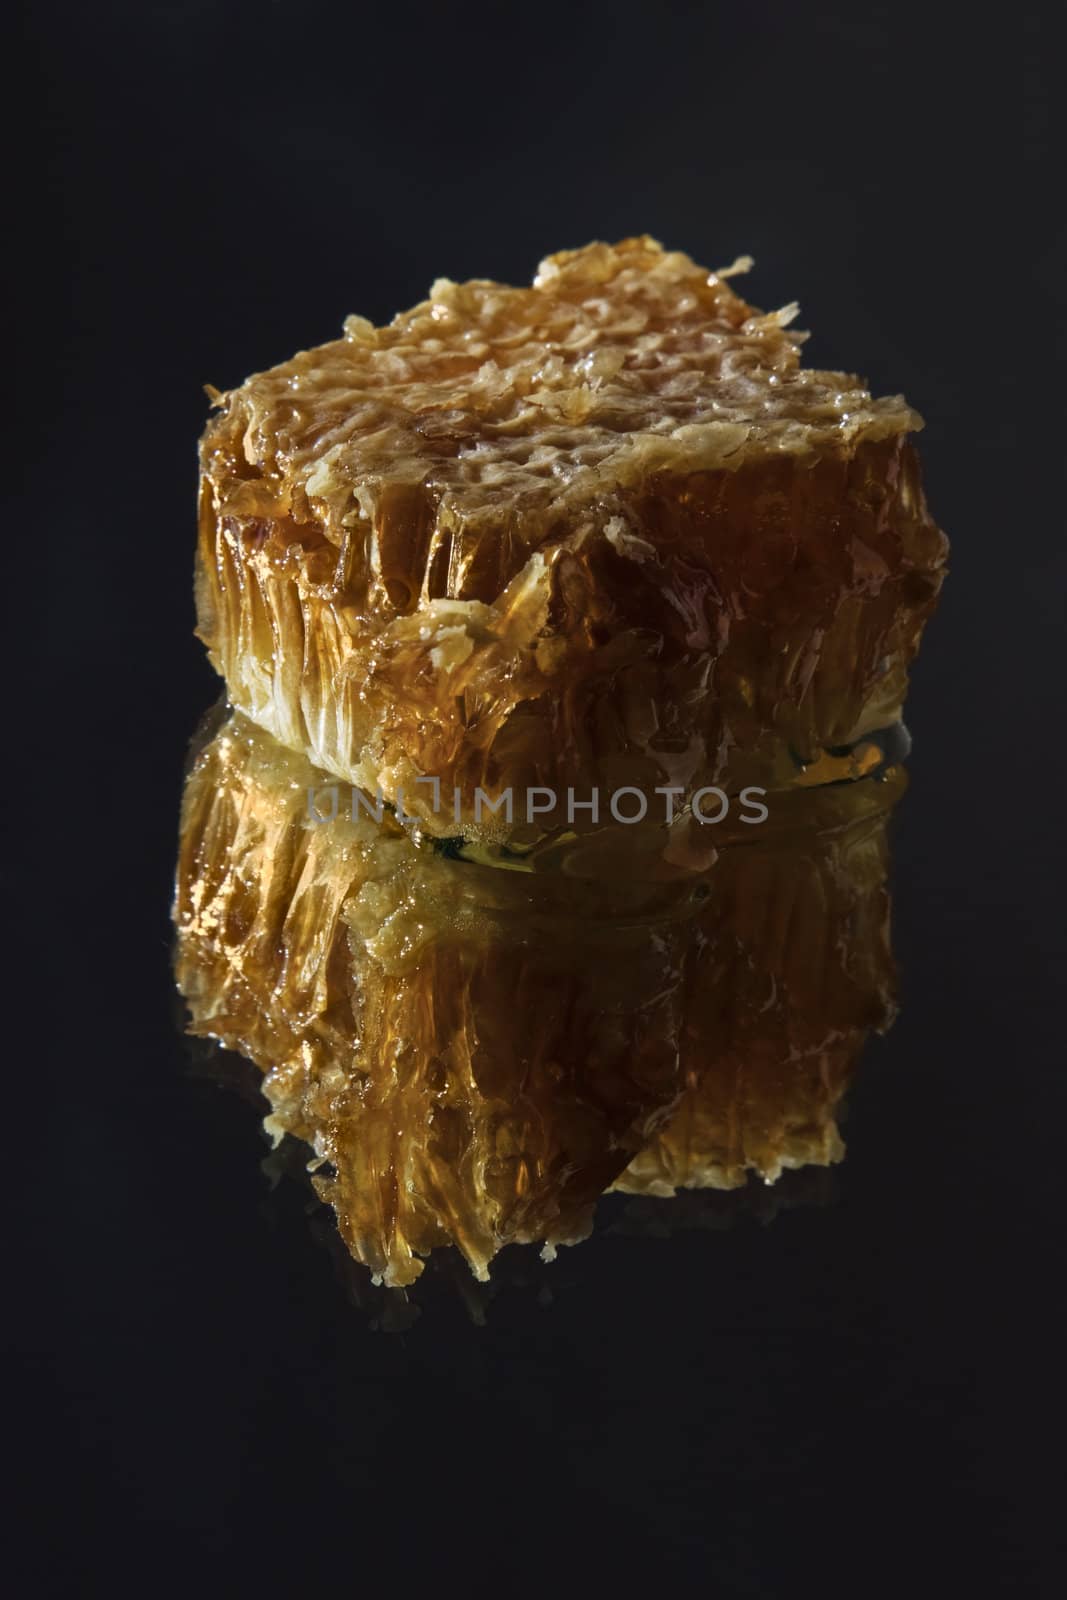 Honey honeycombs by NickS